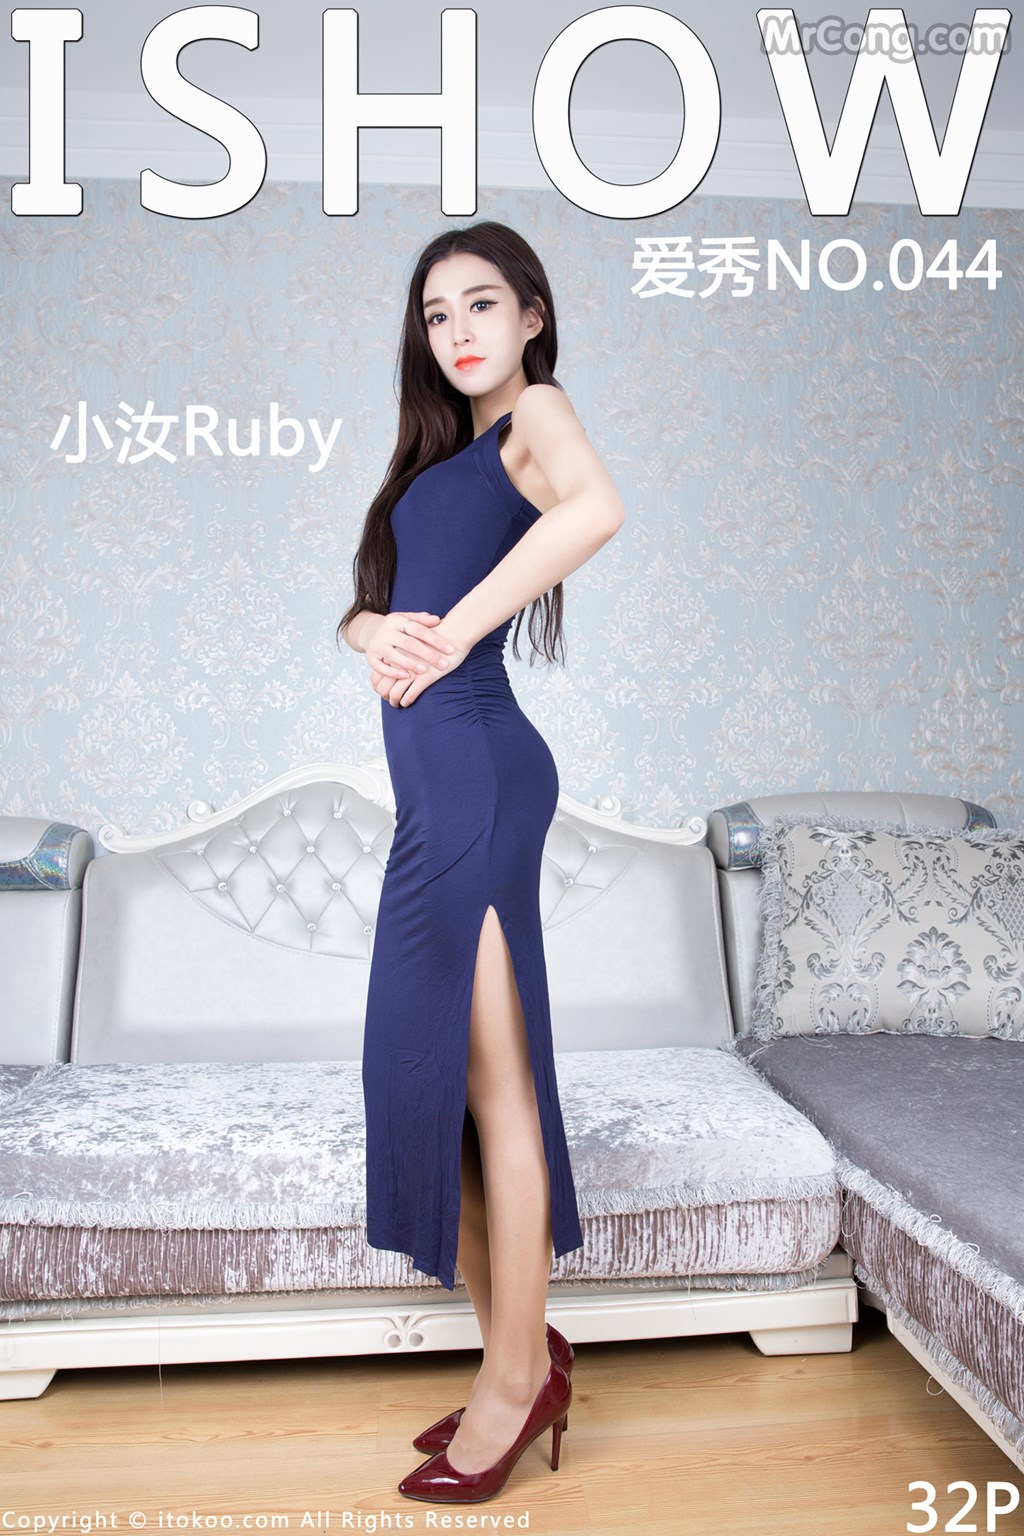 ISHOW No.044: Ruby model (小 汝) (33 photos)